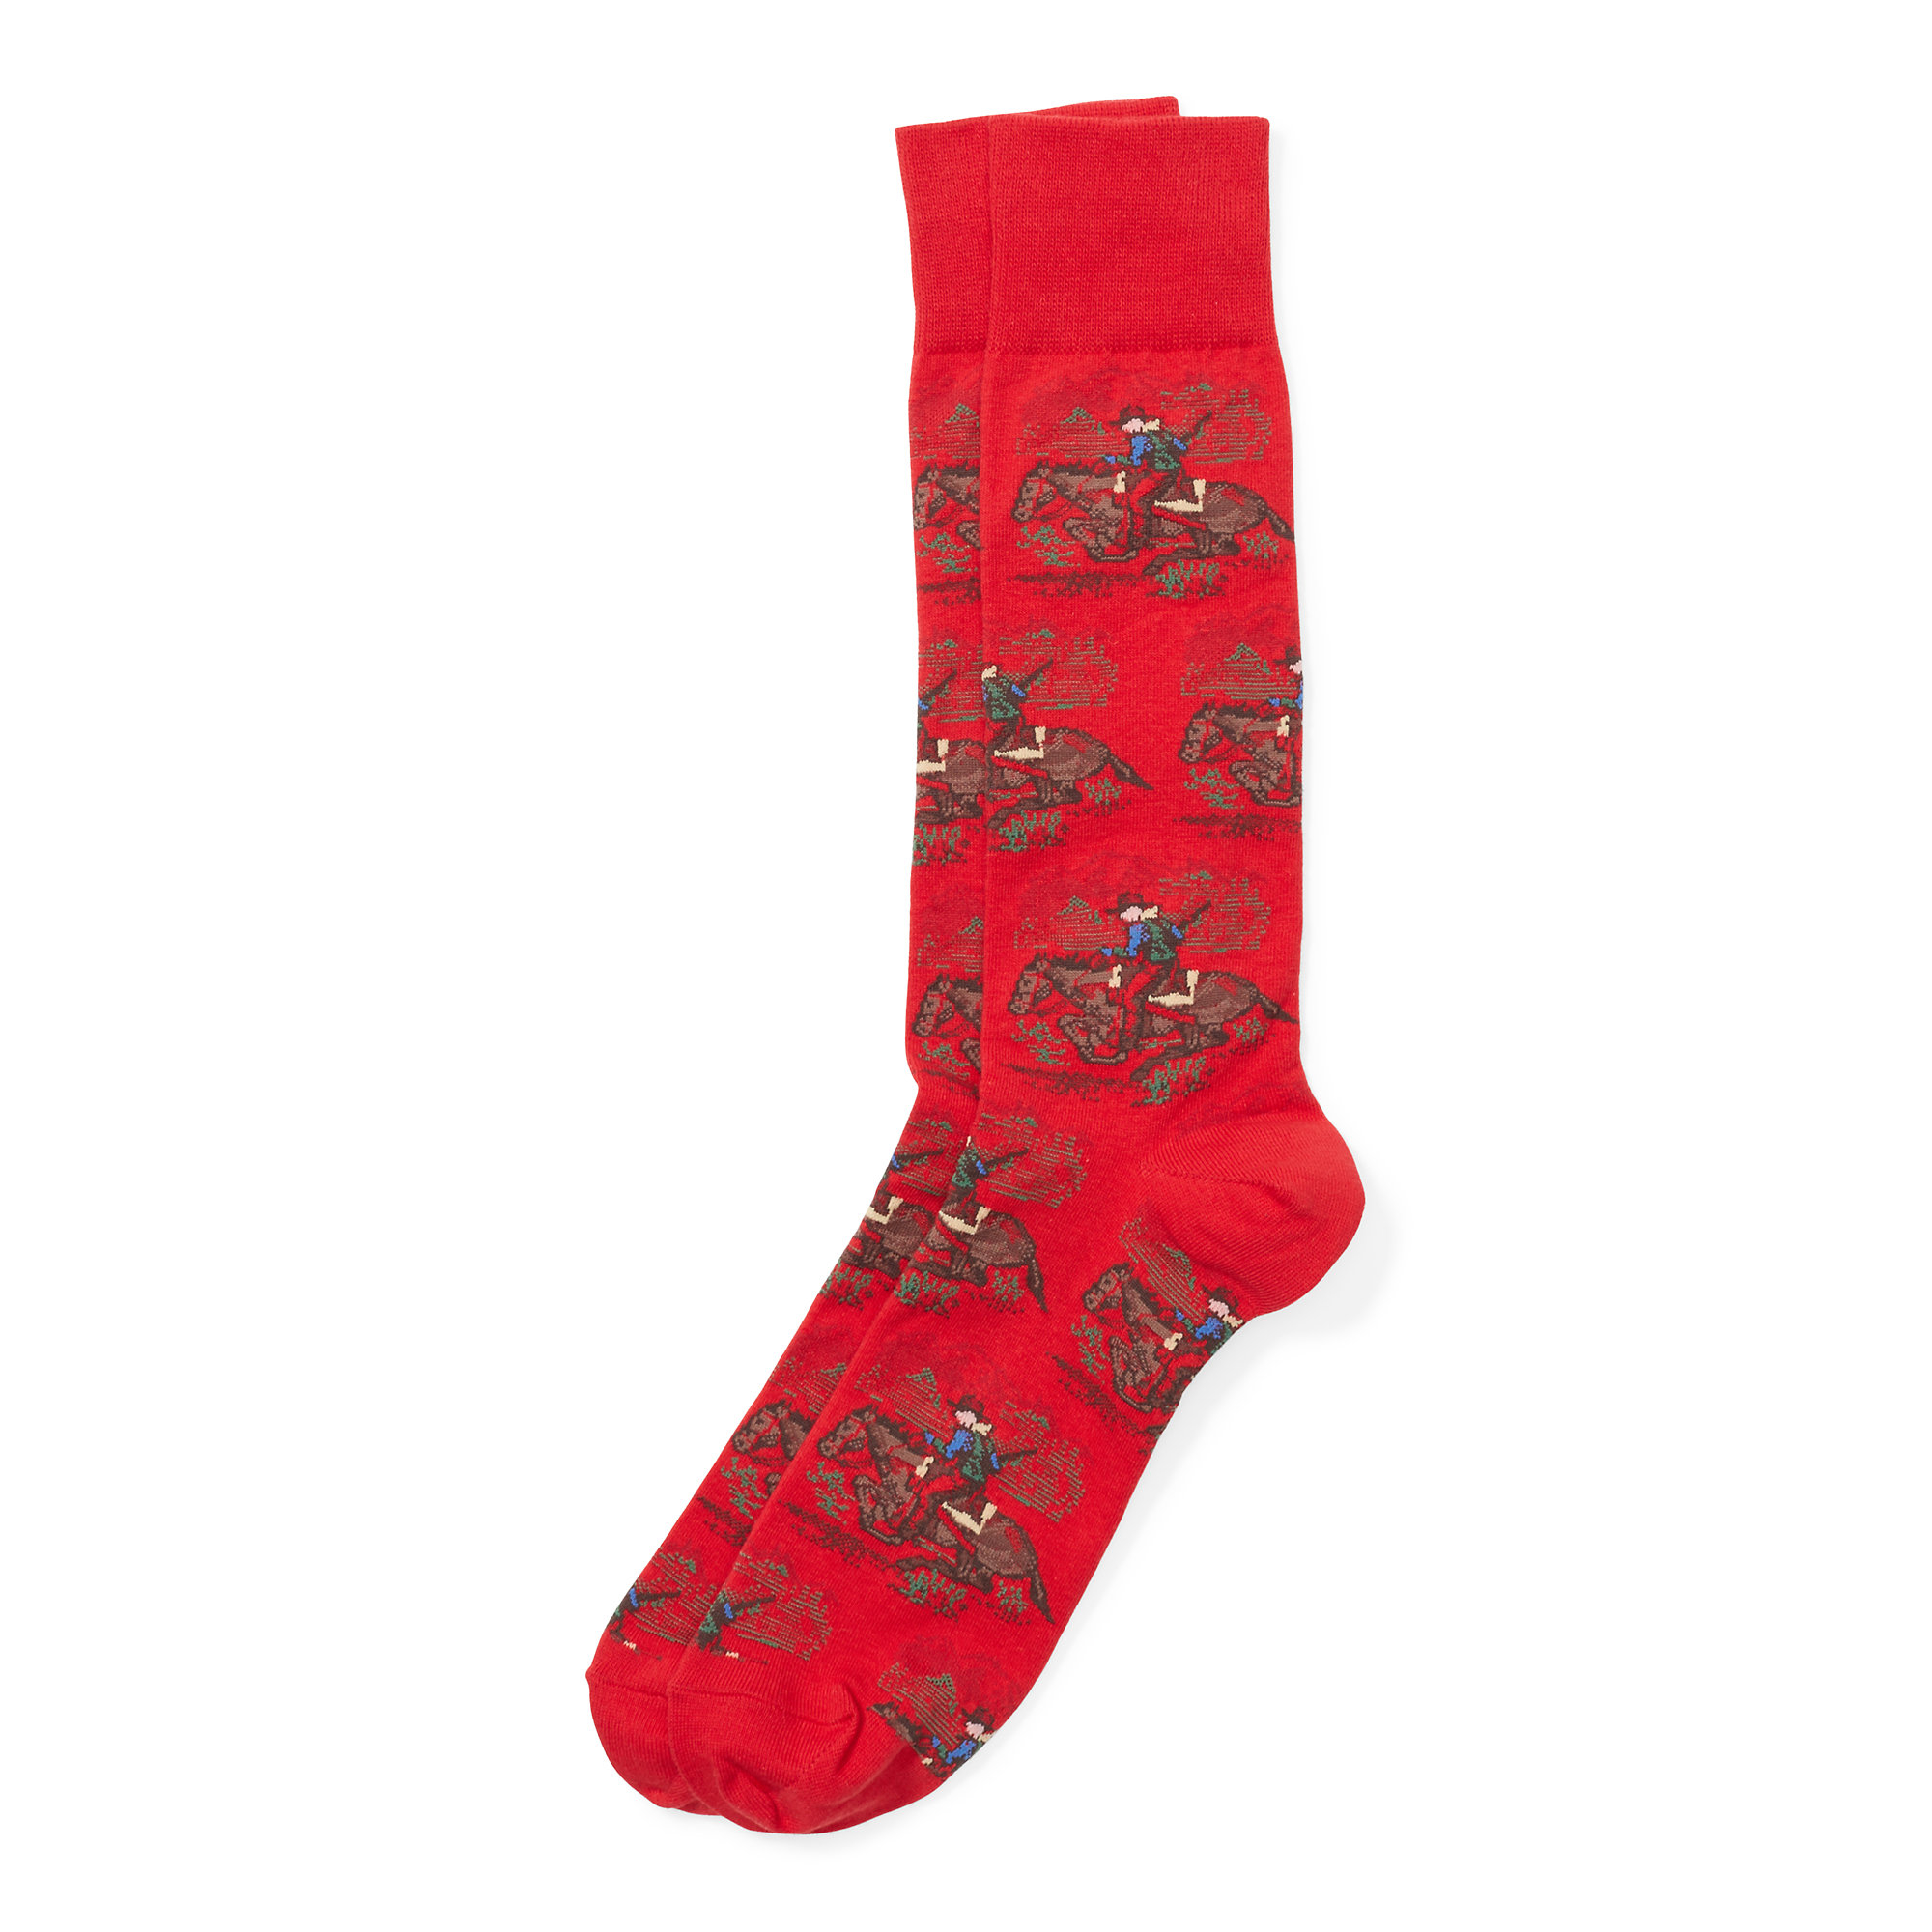 Lyst - Polo Ralph Lauren Cowboy Knit Trouser Socks in Red for Men